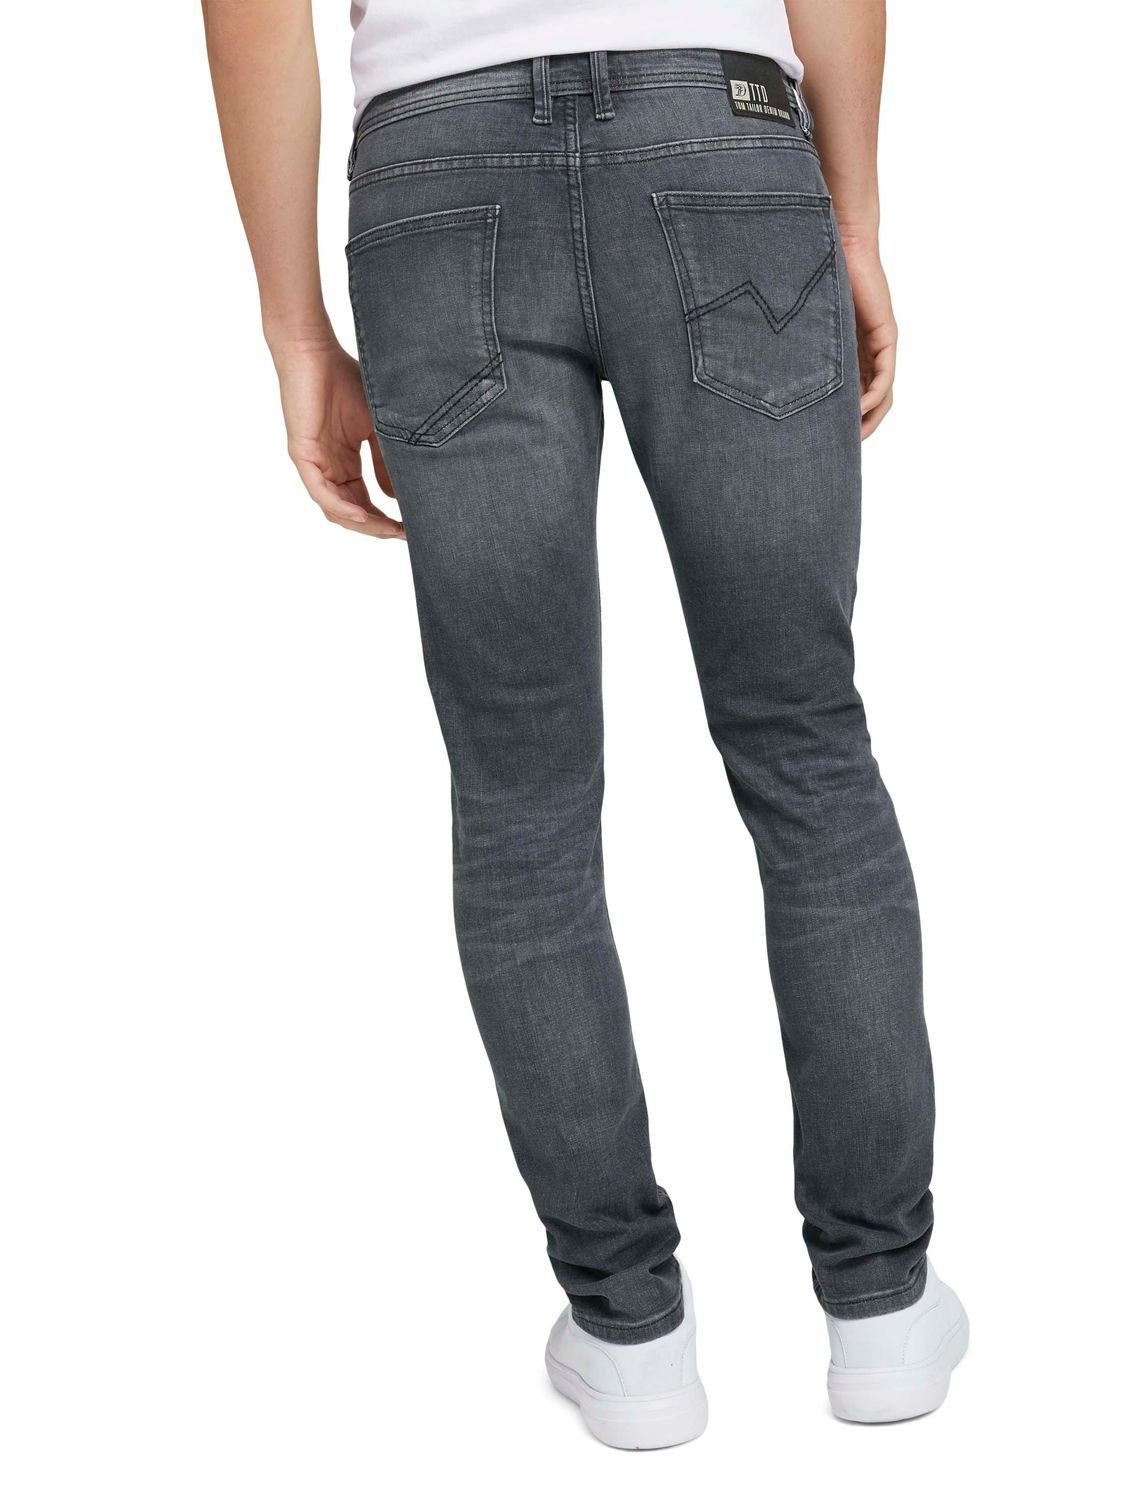 TOM TAILOR Denim Stretch mit Slim-fit-Jeans PIERS